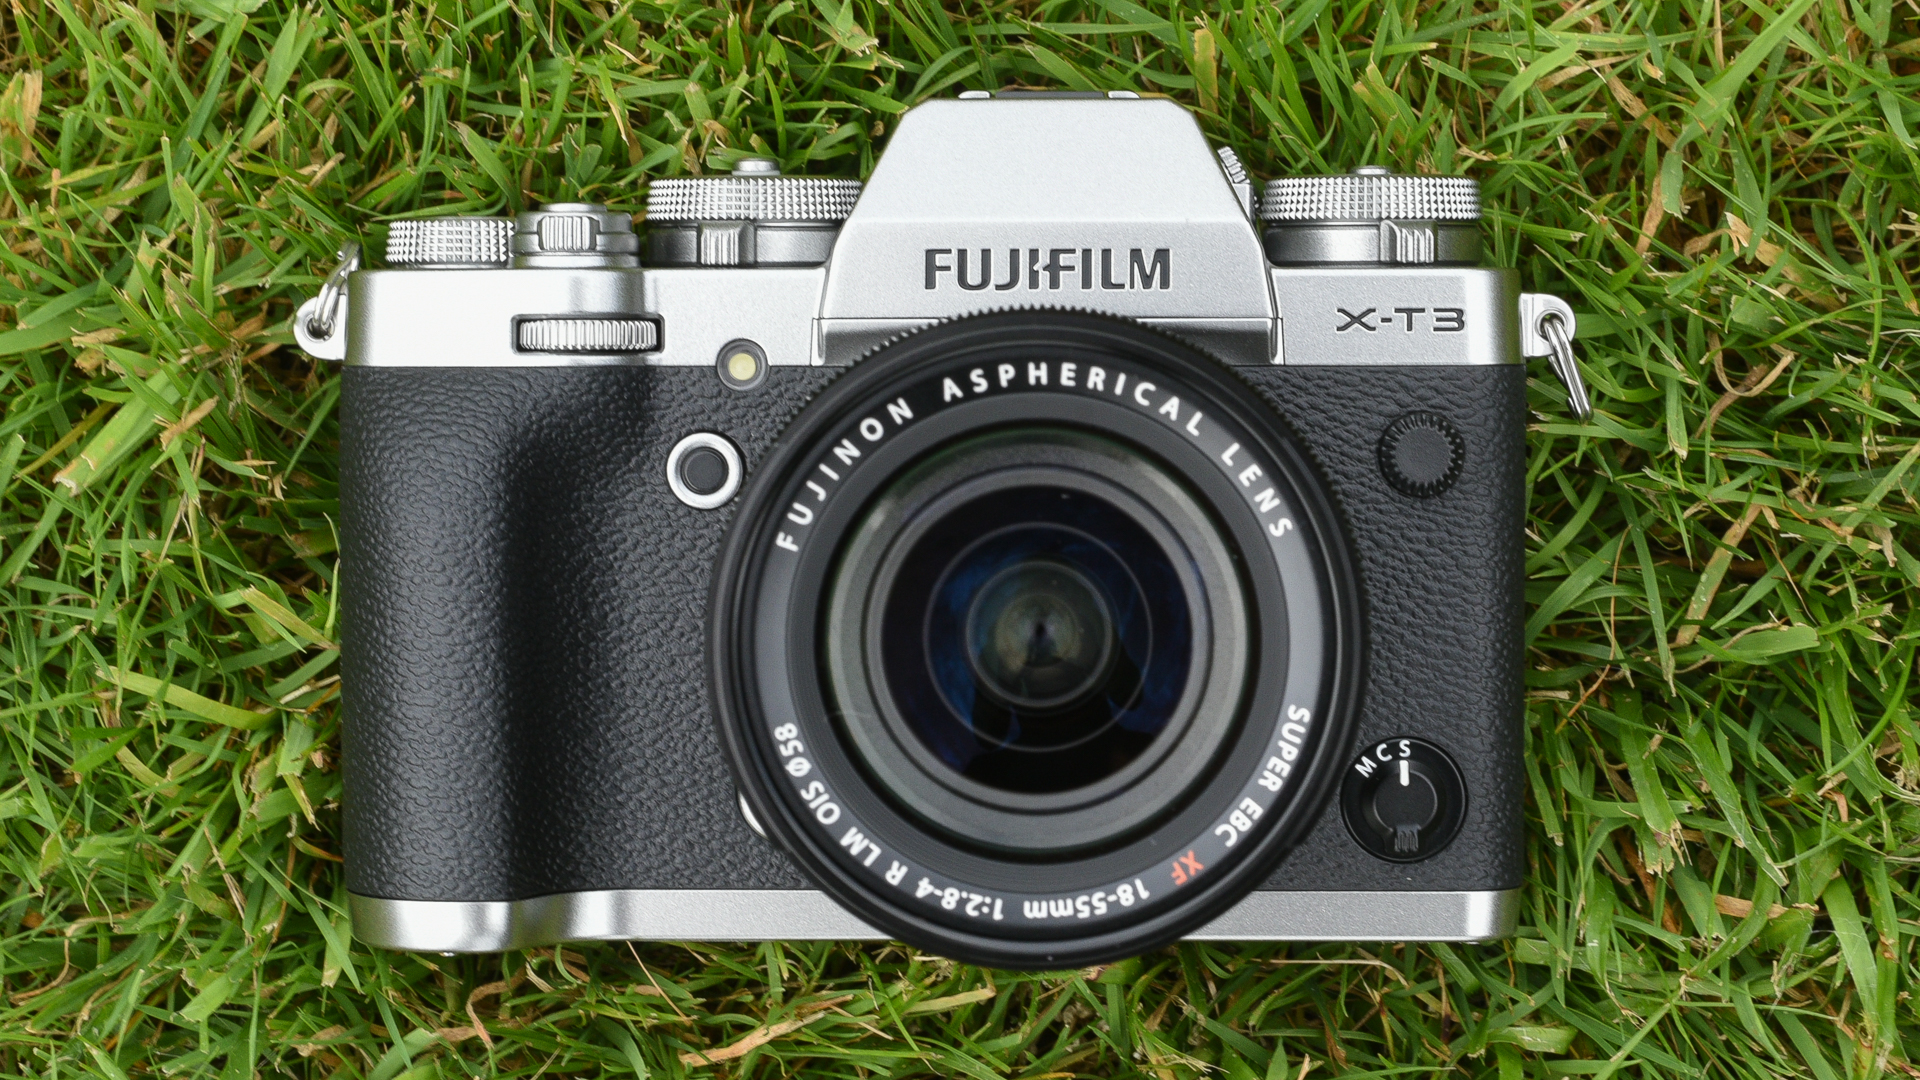 Fujifilm XT3 review